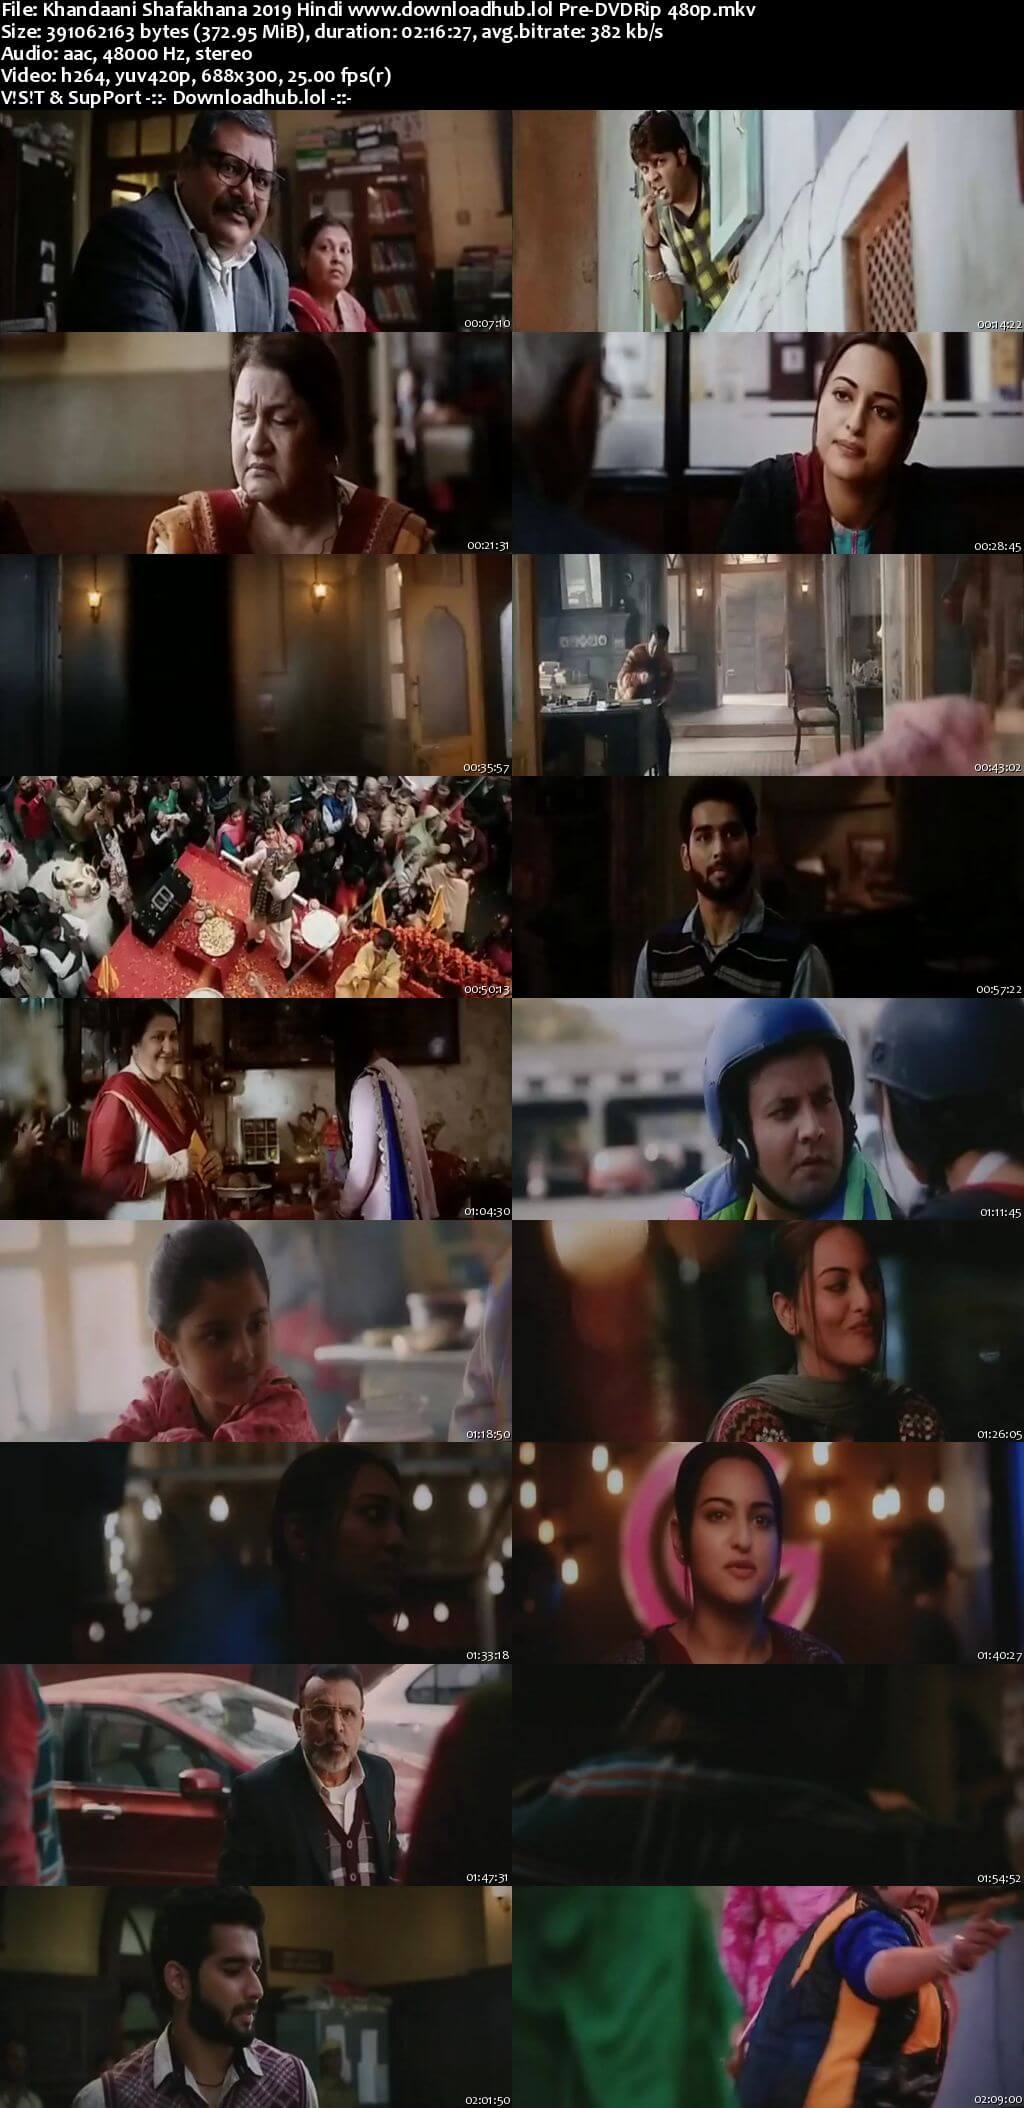 Khandaani Shafakhana 2019 Hindi 350MB Pre-DVDRip 480p